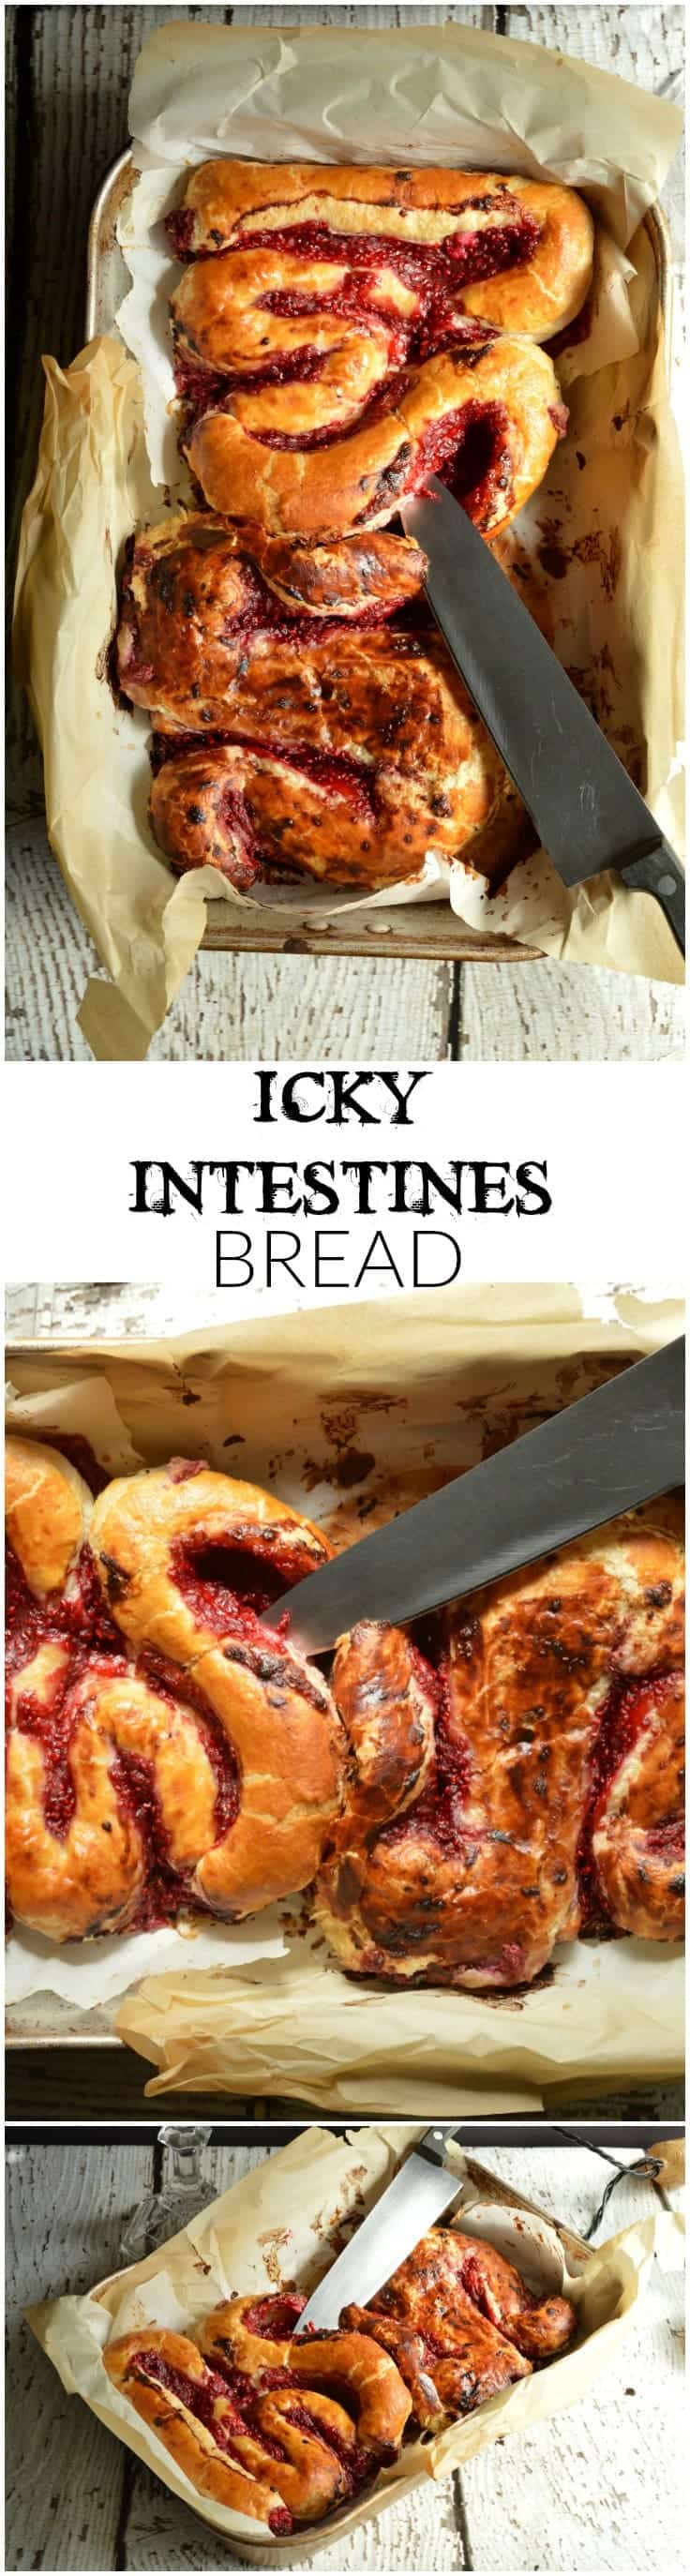 Intestine Bread - Scary Snacks Recipes